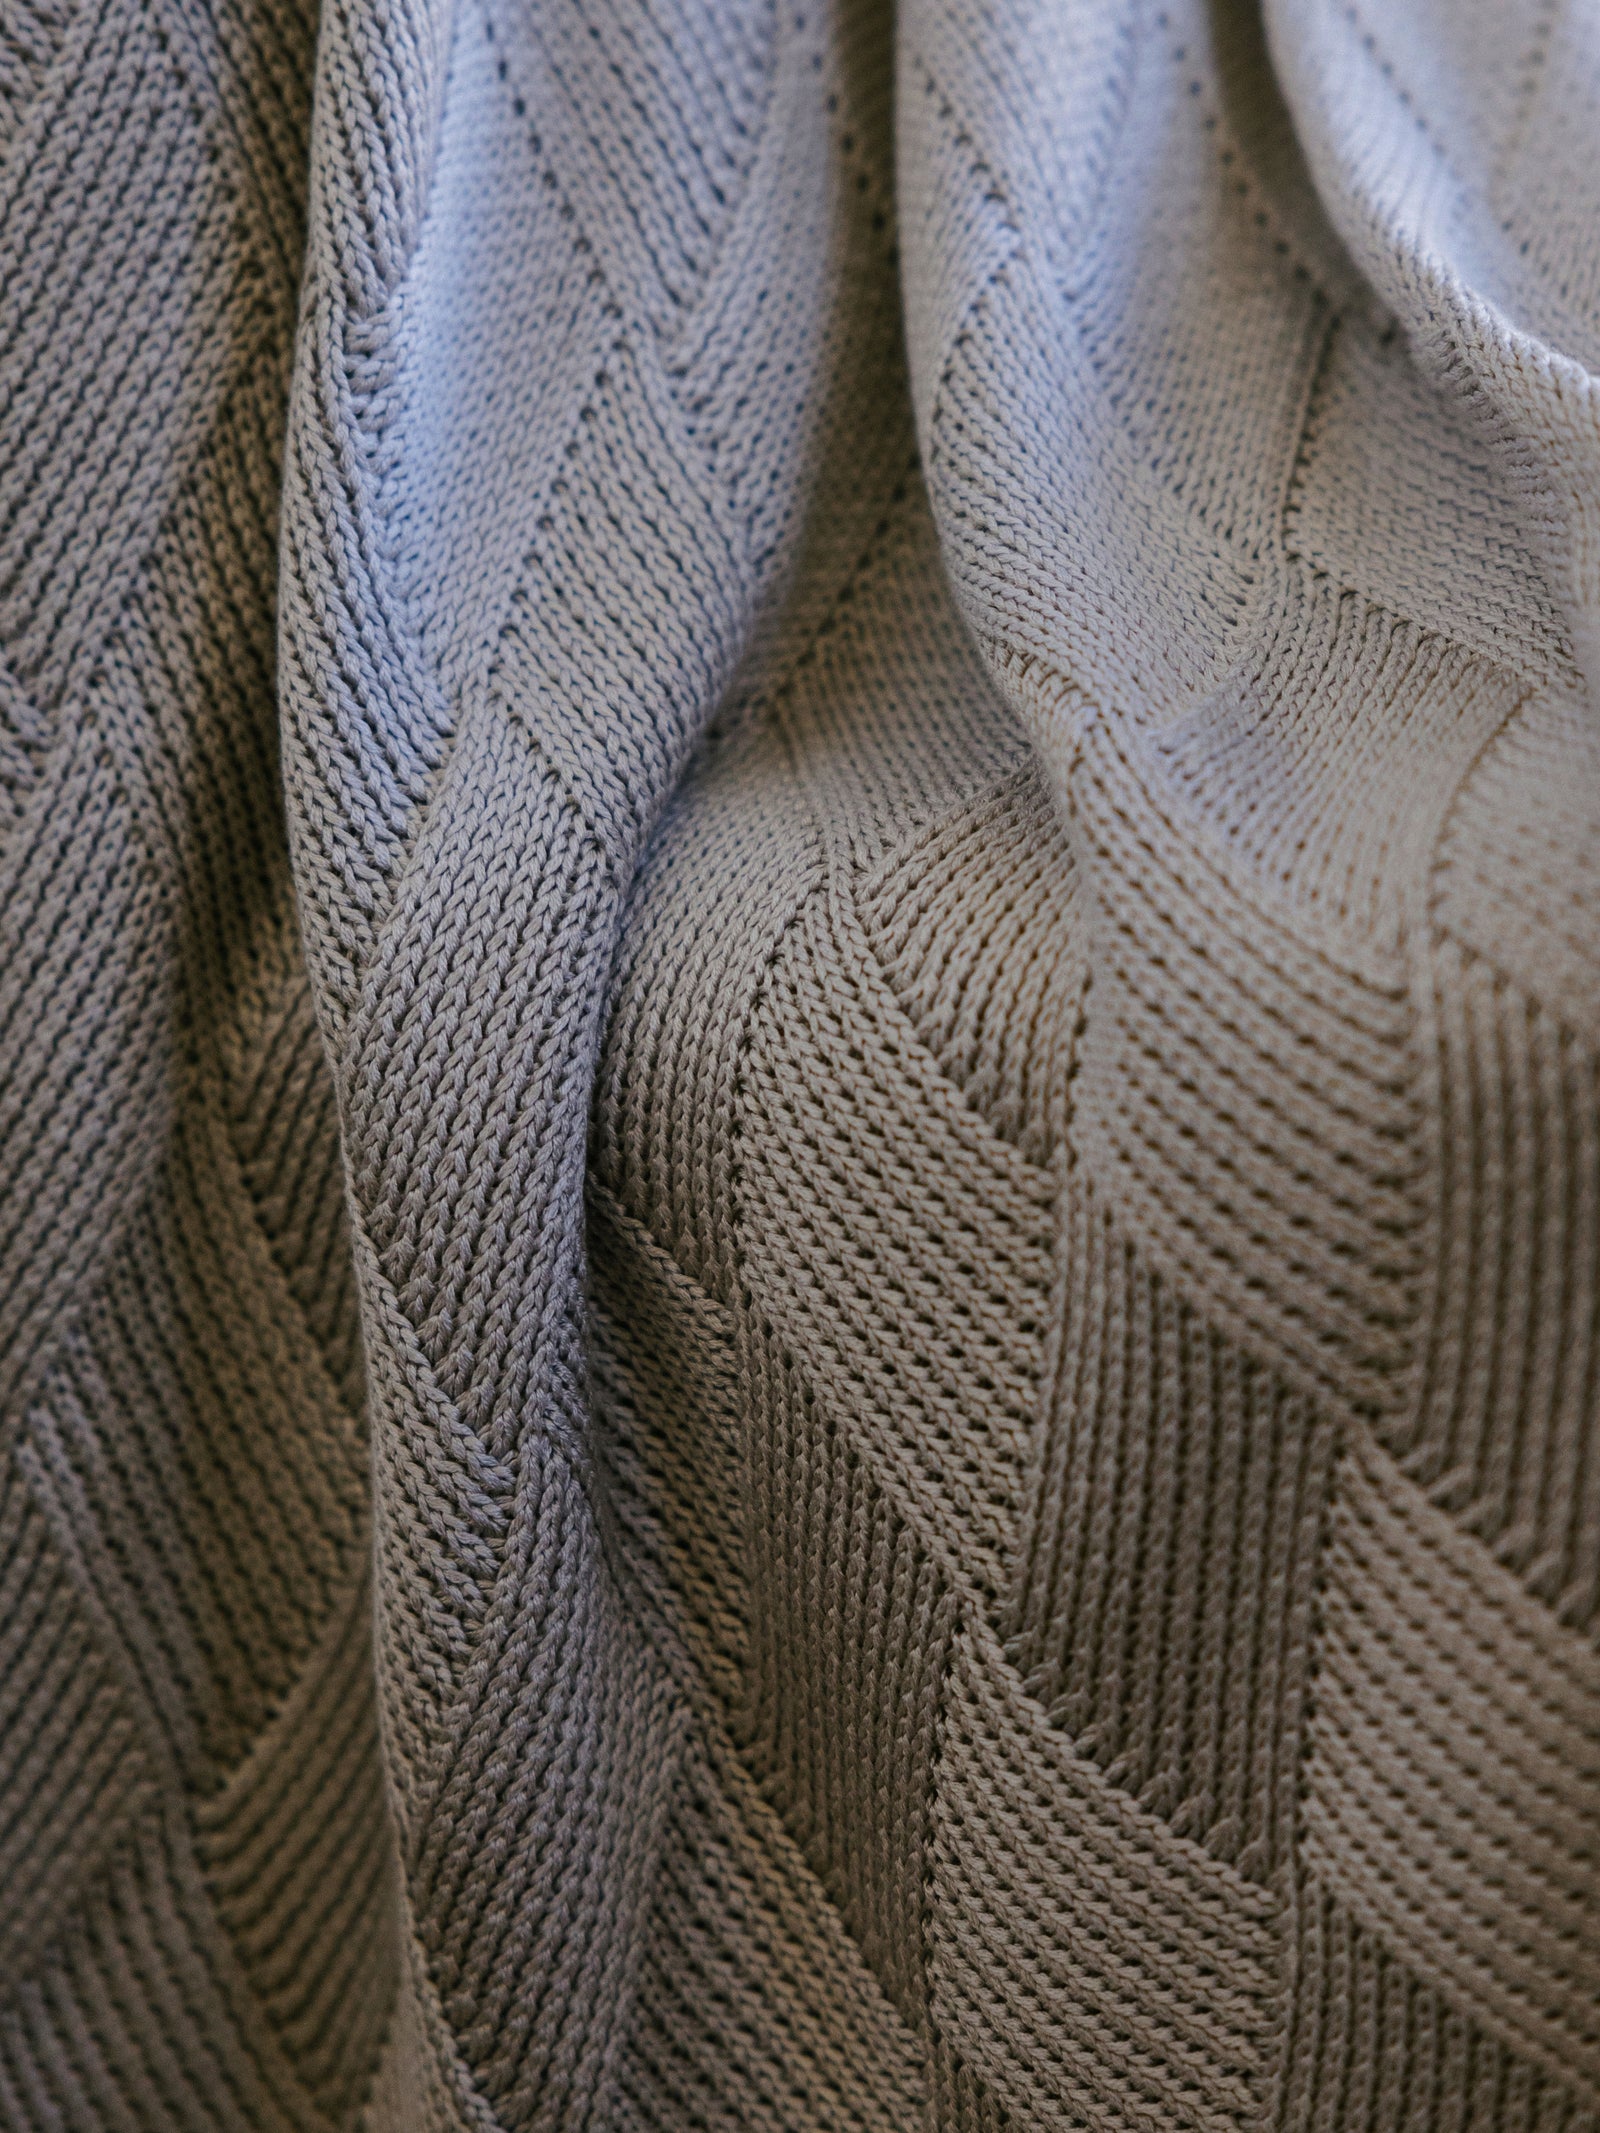 Walnut Diamond Knit Blanket photographed close up. 